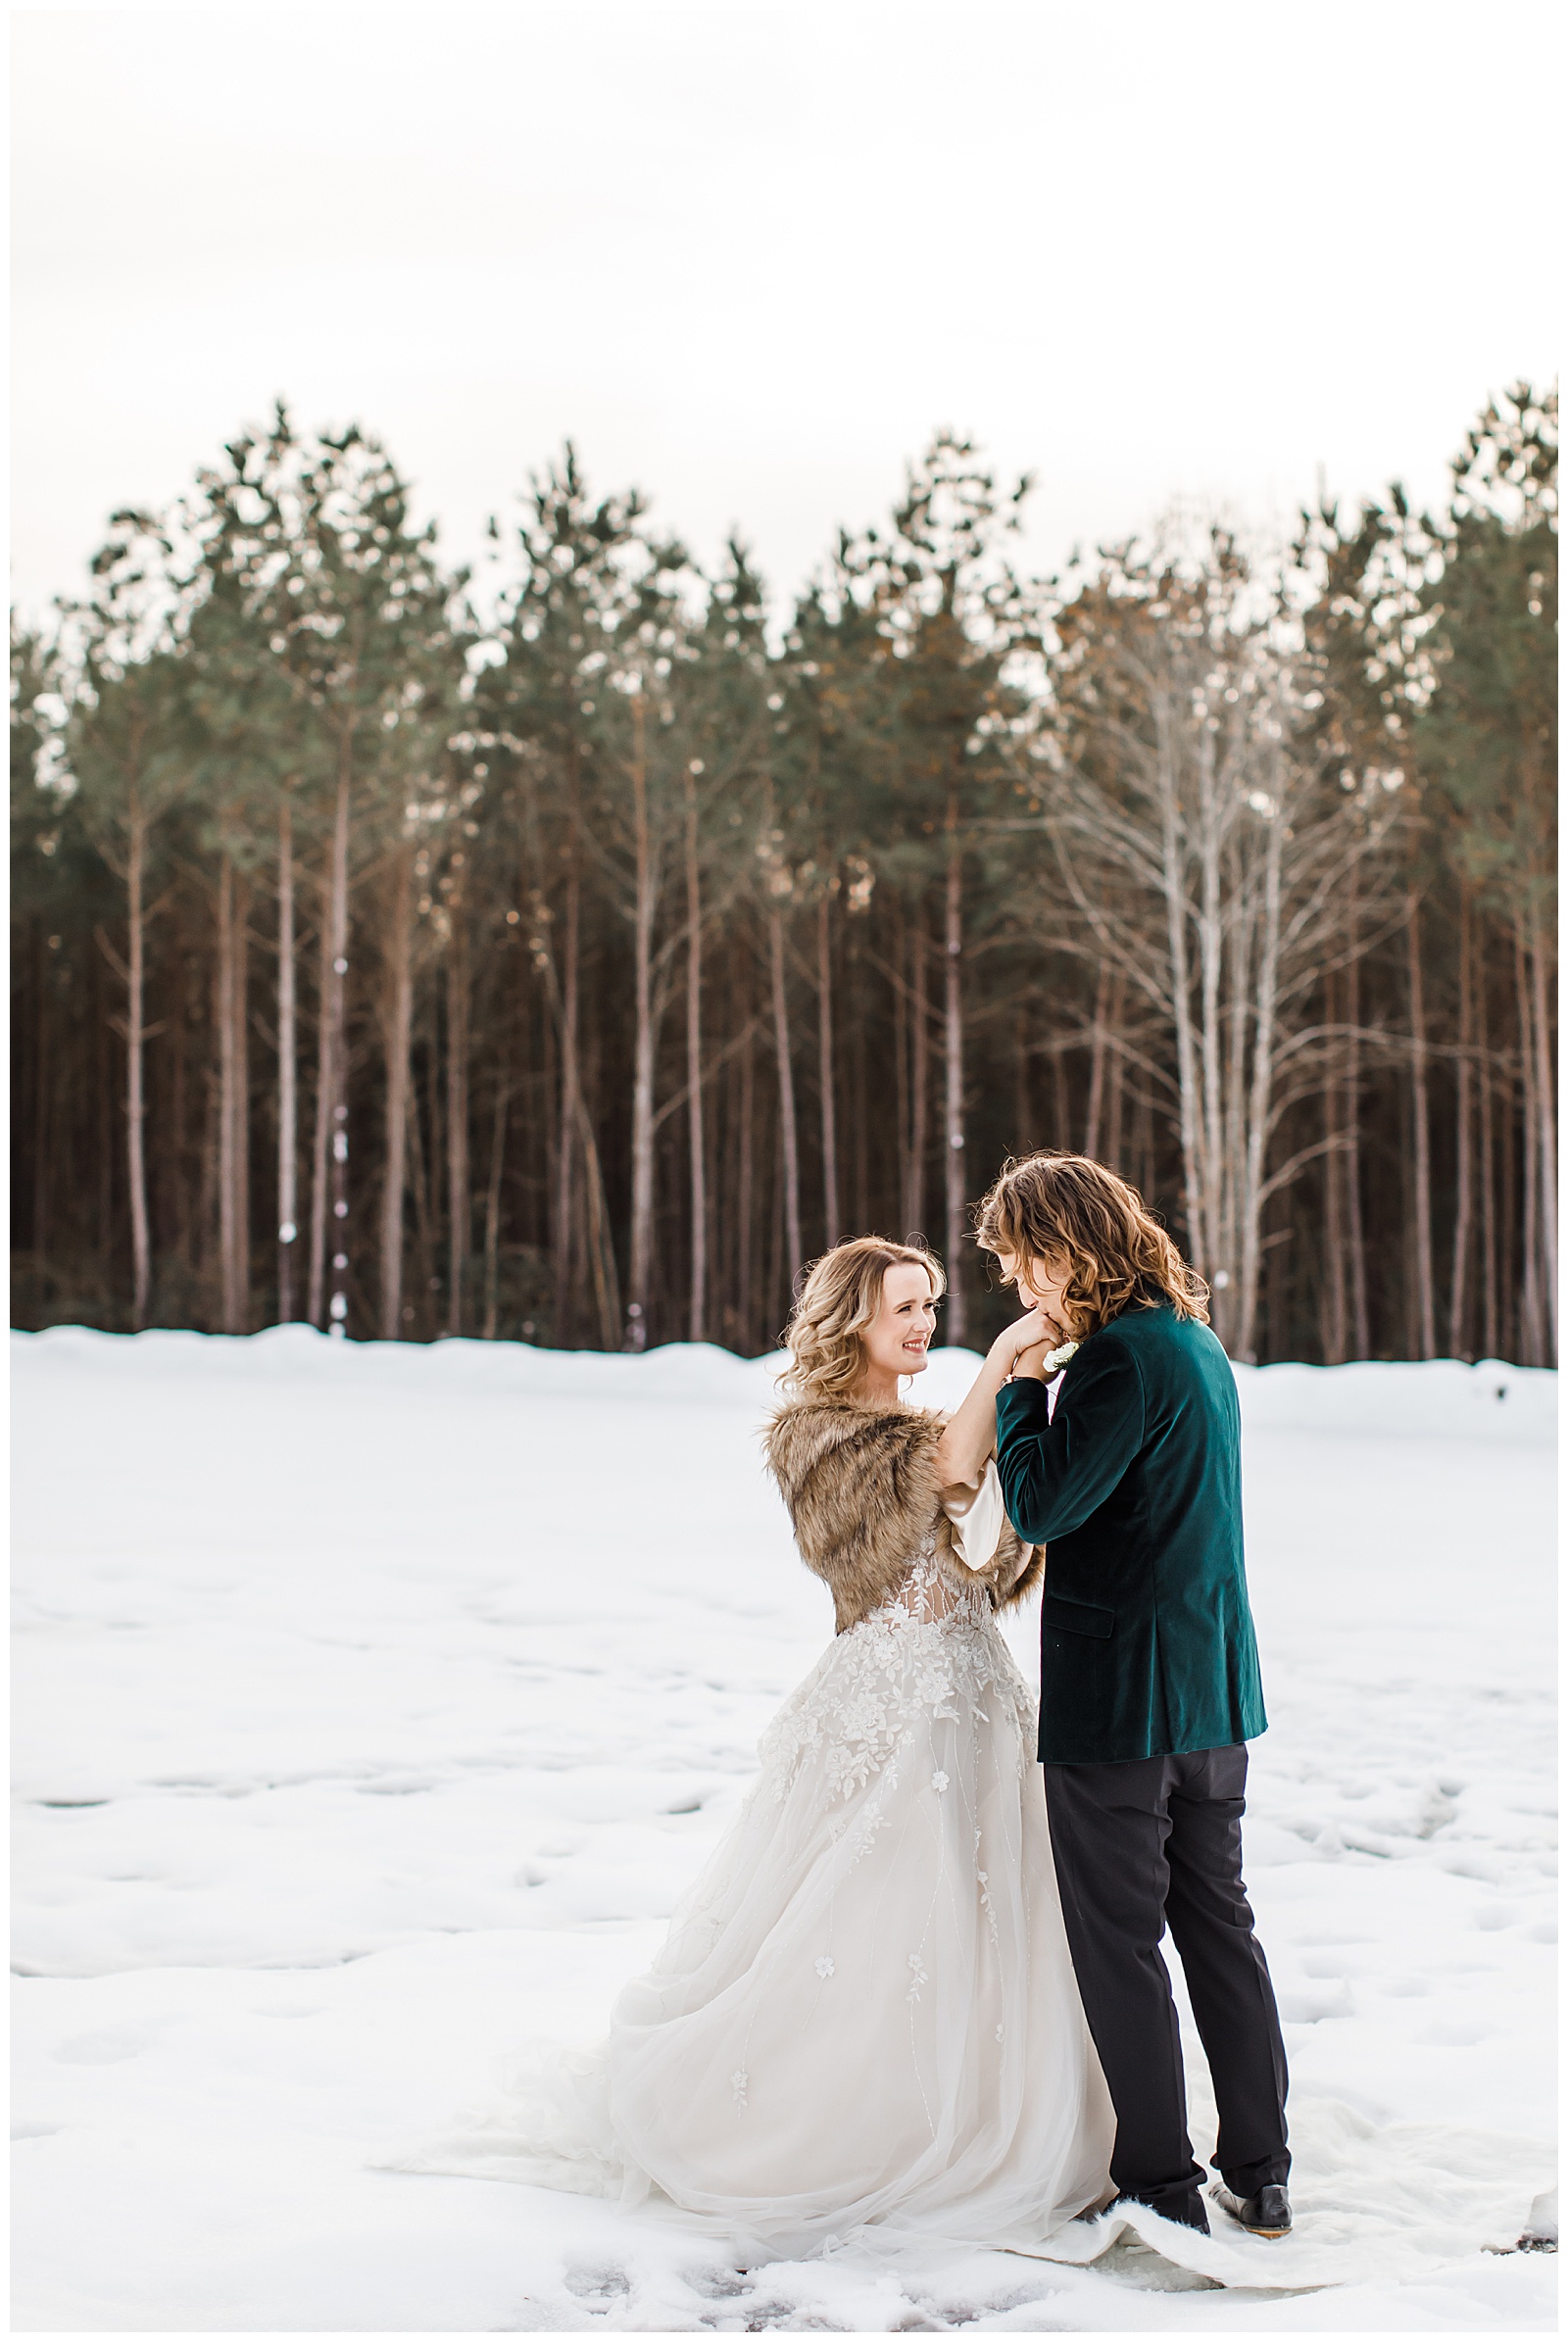 antebellum-of-new-kent-winter-wedding-inspiration-ch-sh-fredericks-photography_0044.jpg